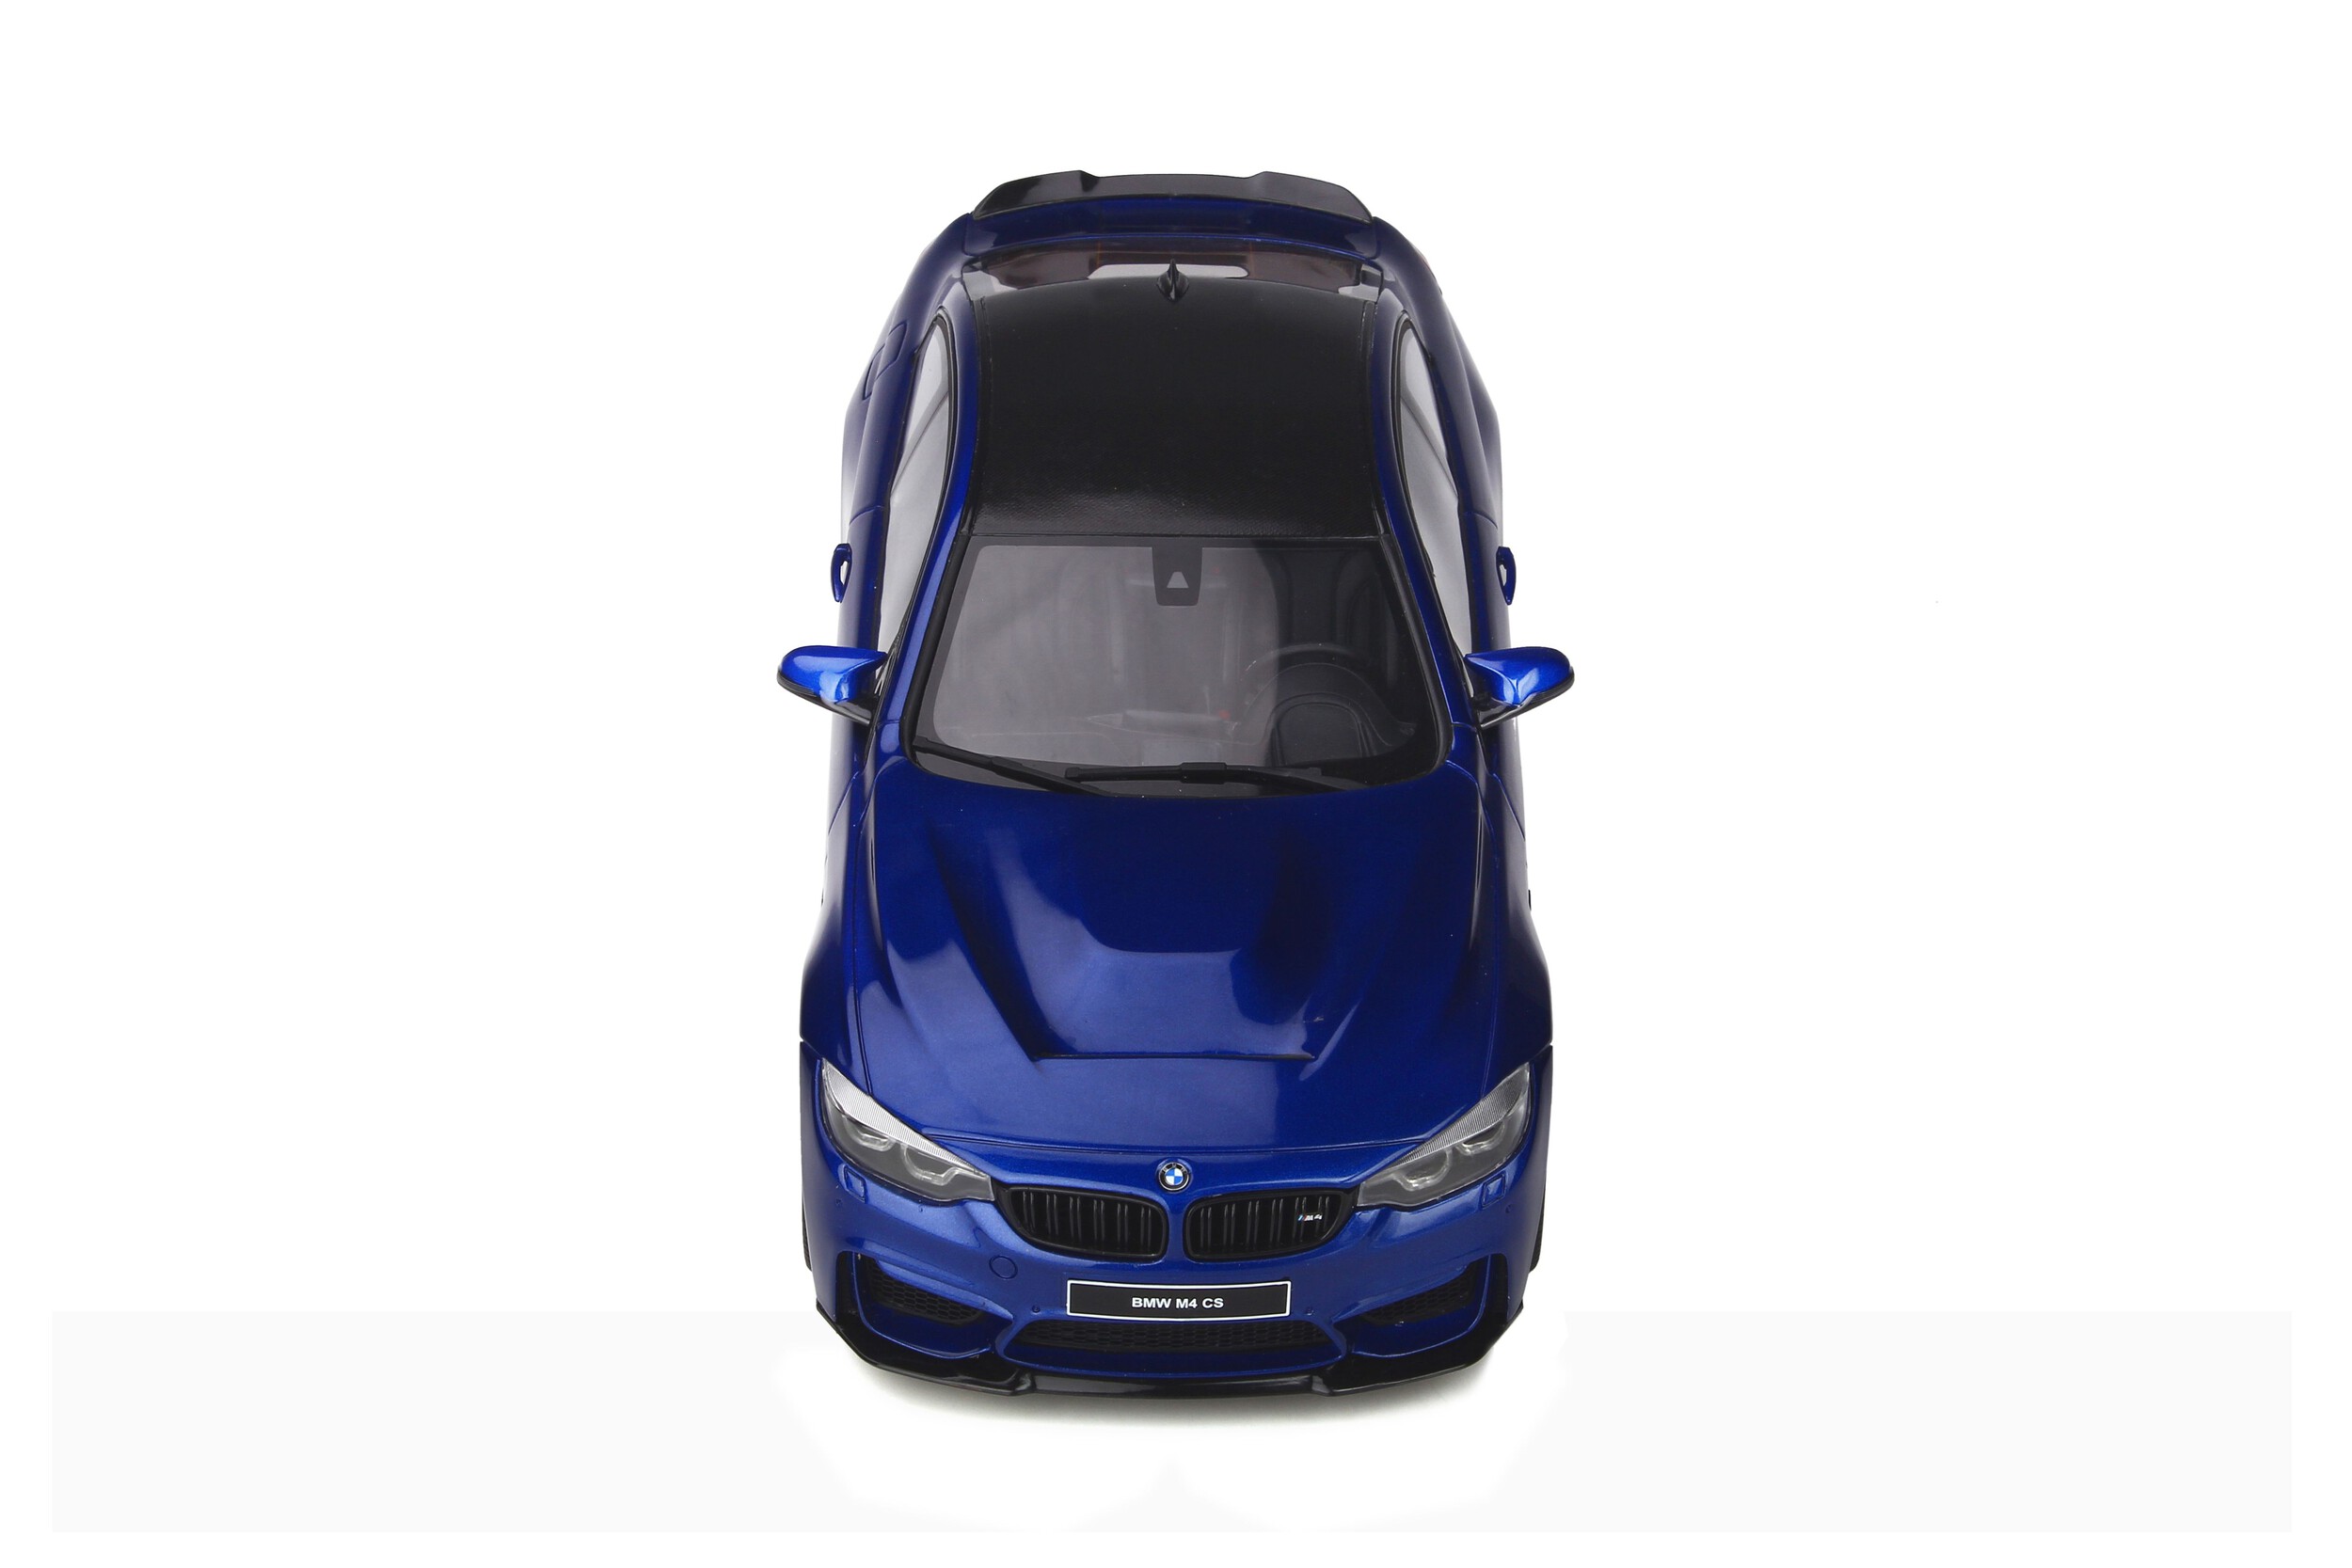 BMW M4 CS - Voiture miniature de collection - GT SPIRIT